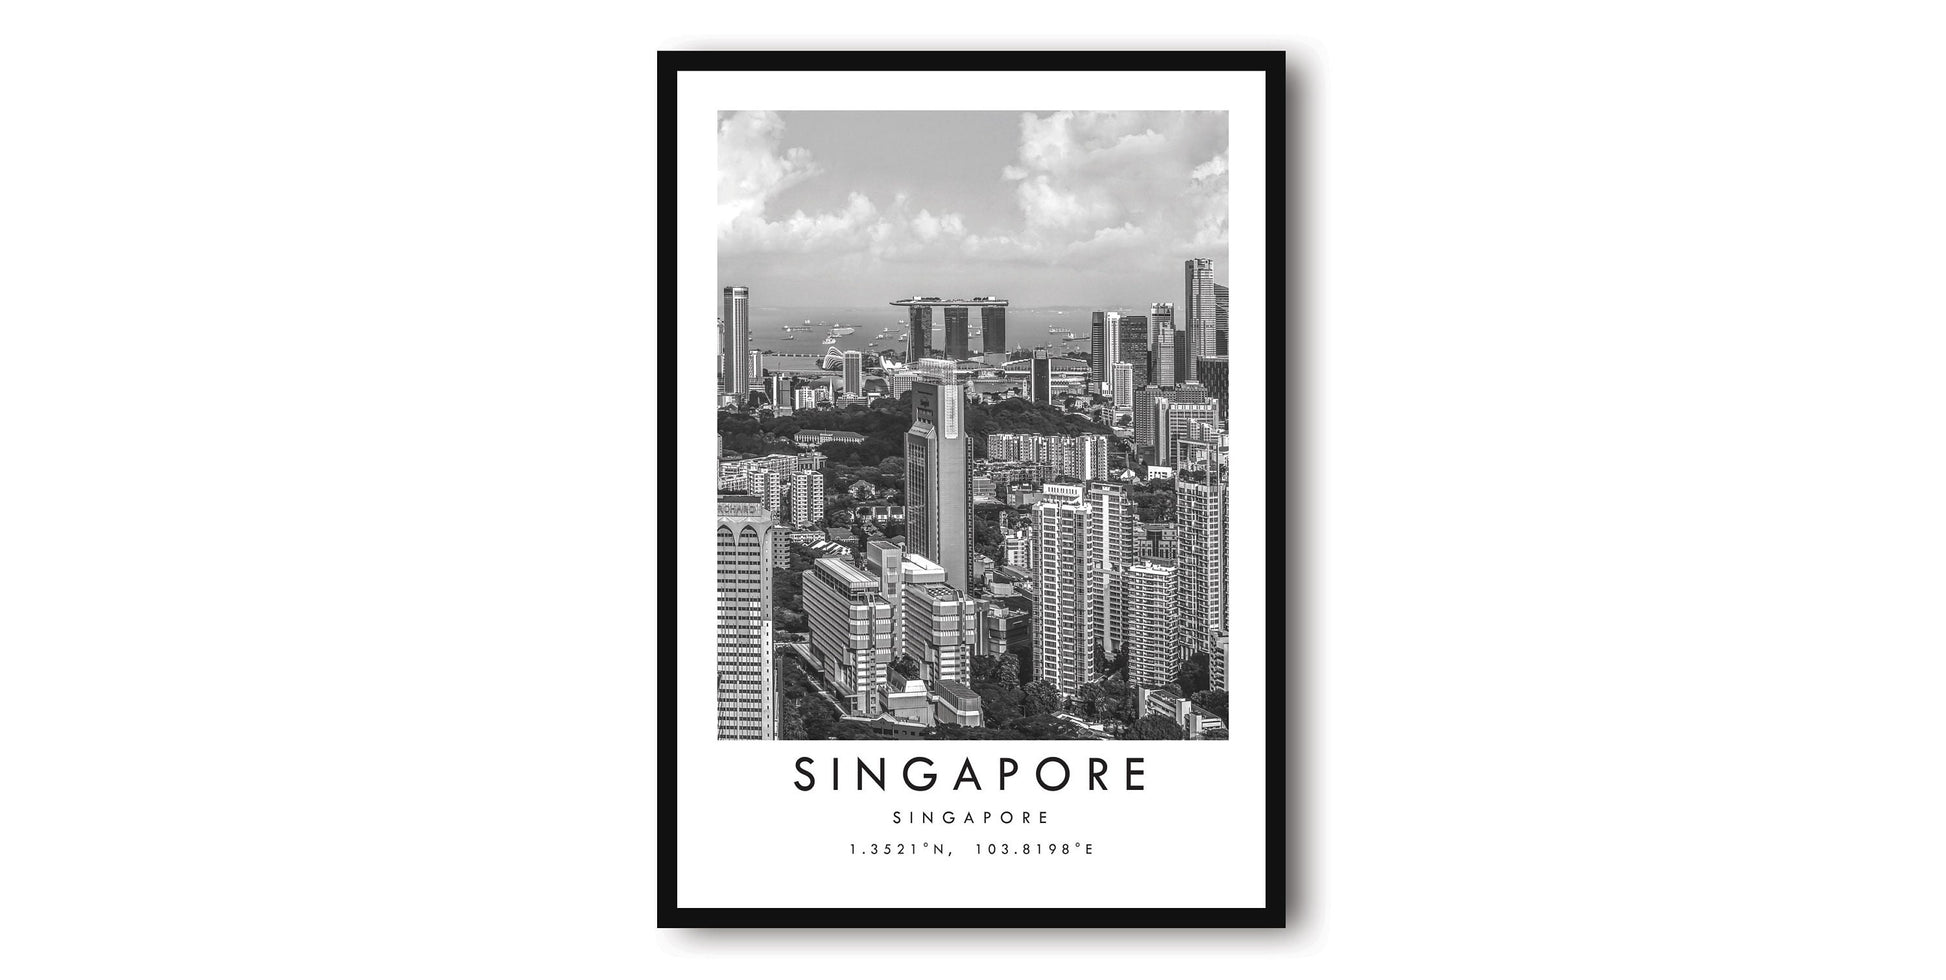 Singapore Travel Print